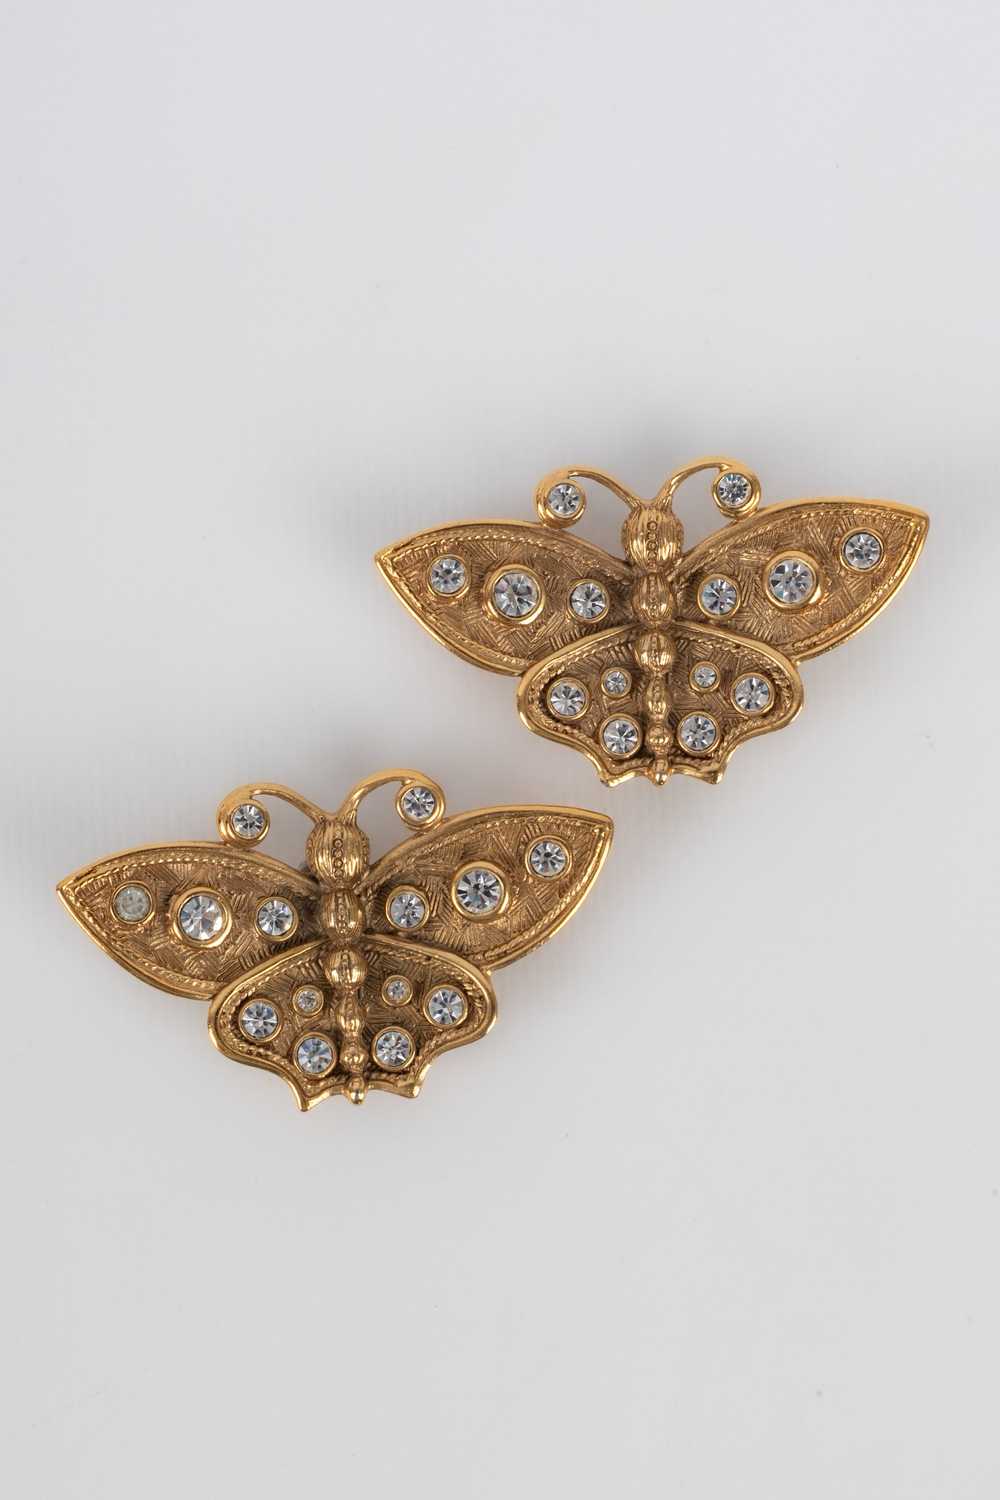 Christian Dior "Butterflies" earrings - image 2